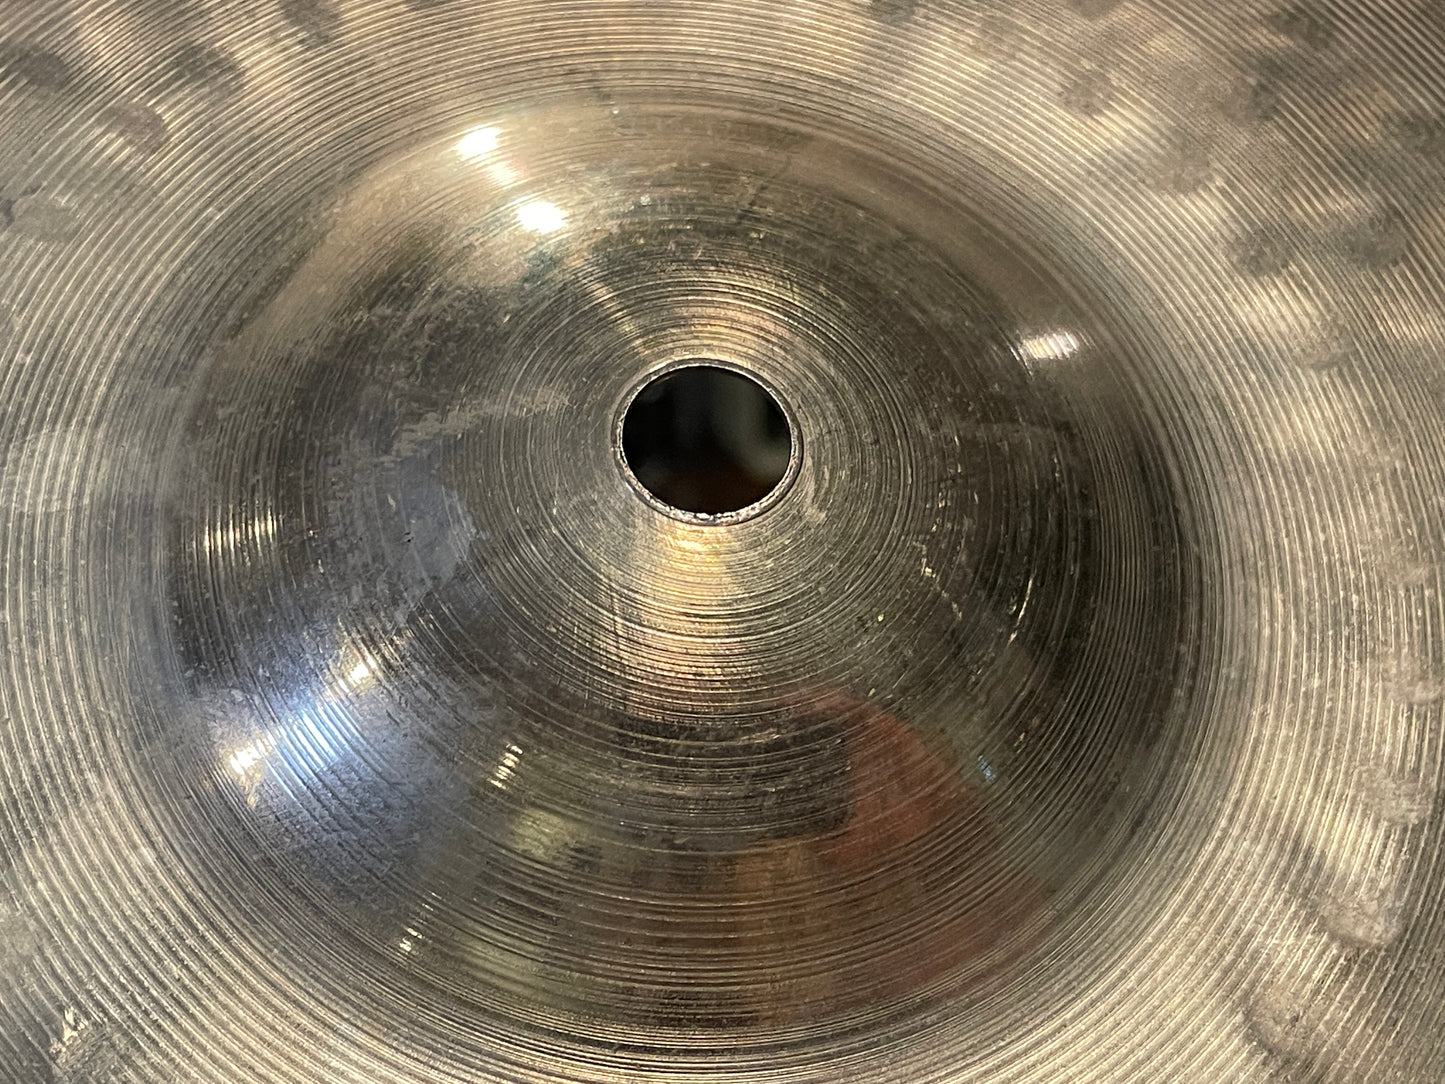 14" Zildjian K Custom Fast Crash Cymbal 742g